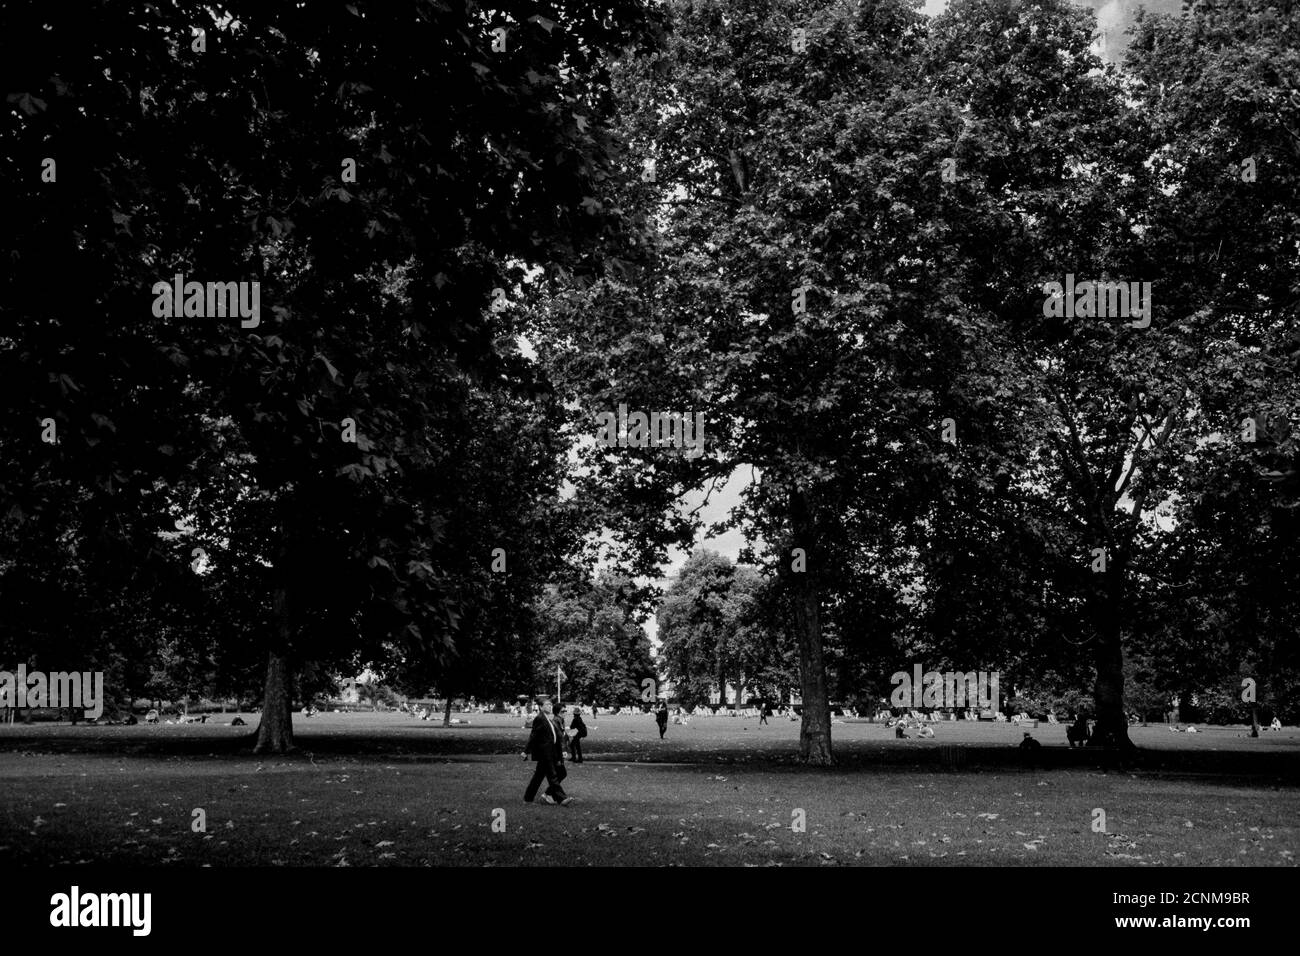 Green Park, Buckingham Palace, Westminster, Londres, Grande-Bretagne, Royaume-Uni Banque D'Images